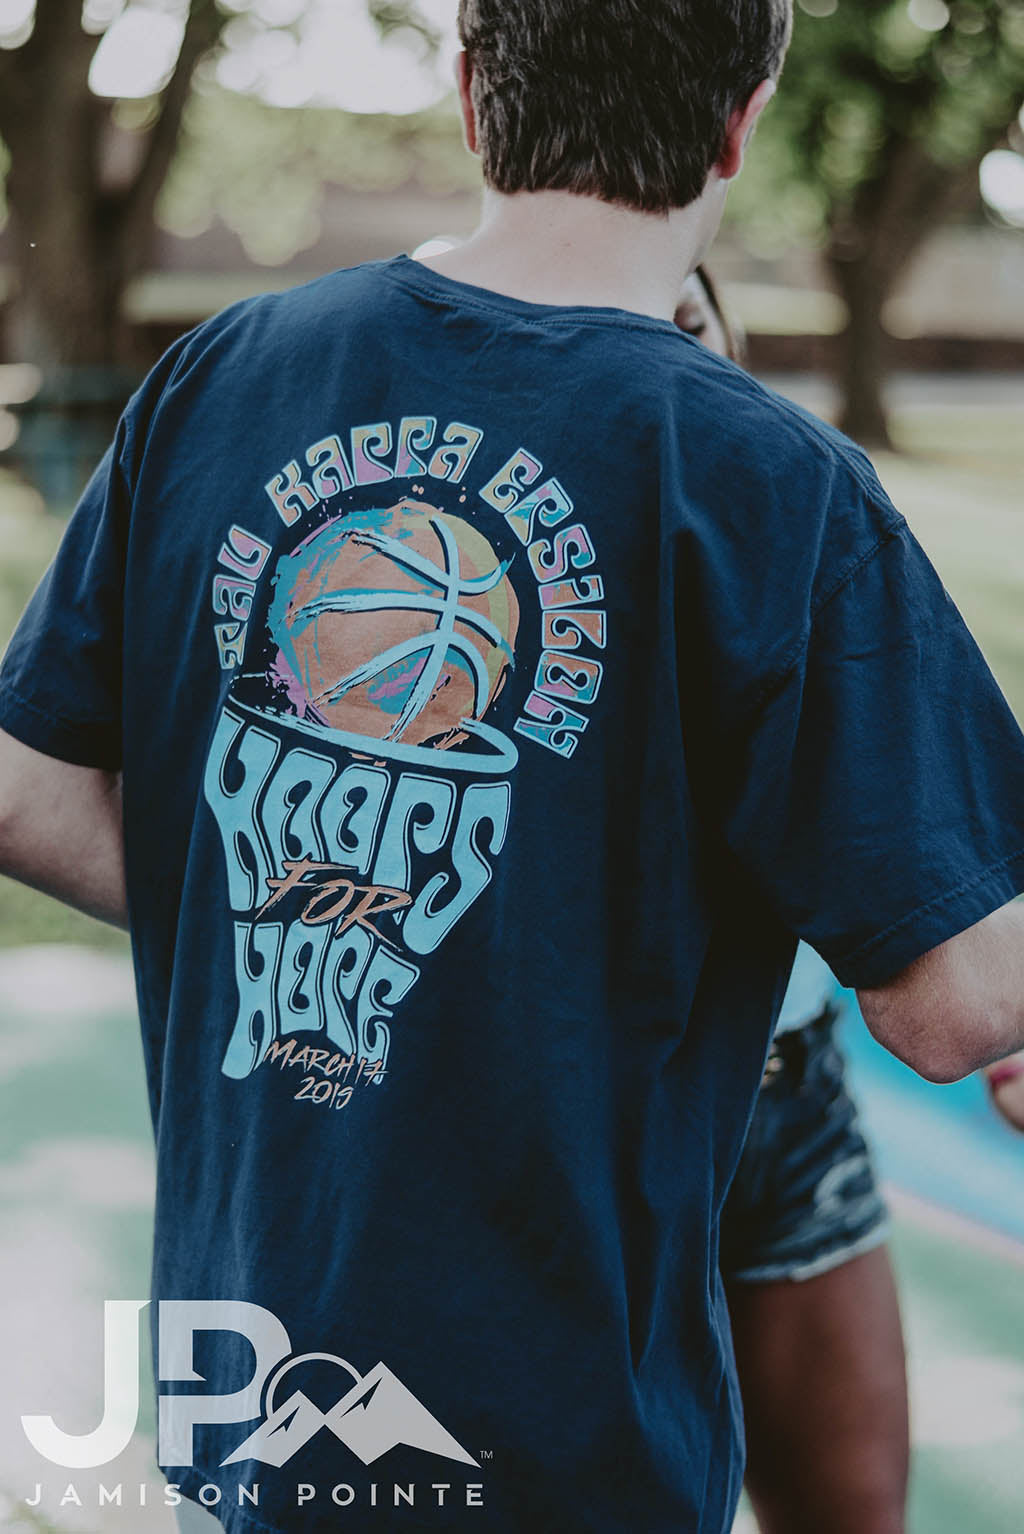 unique basketball shirt designs